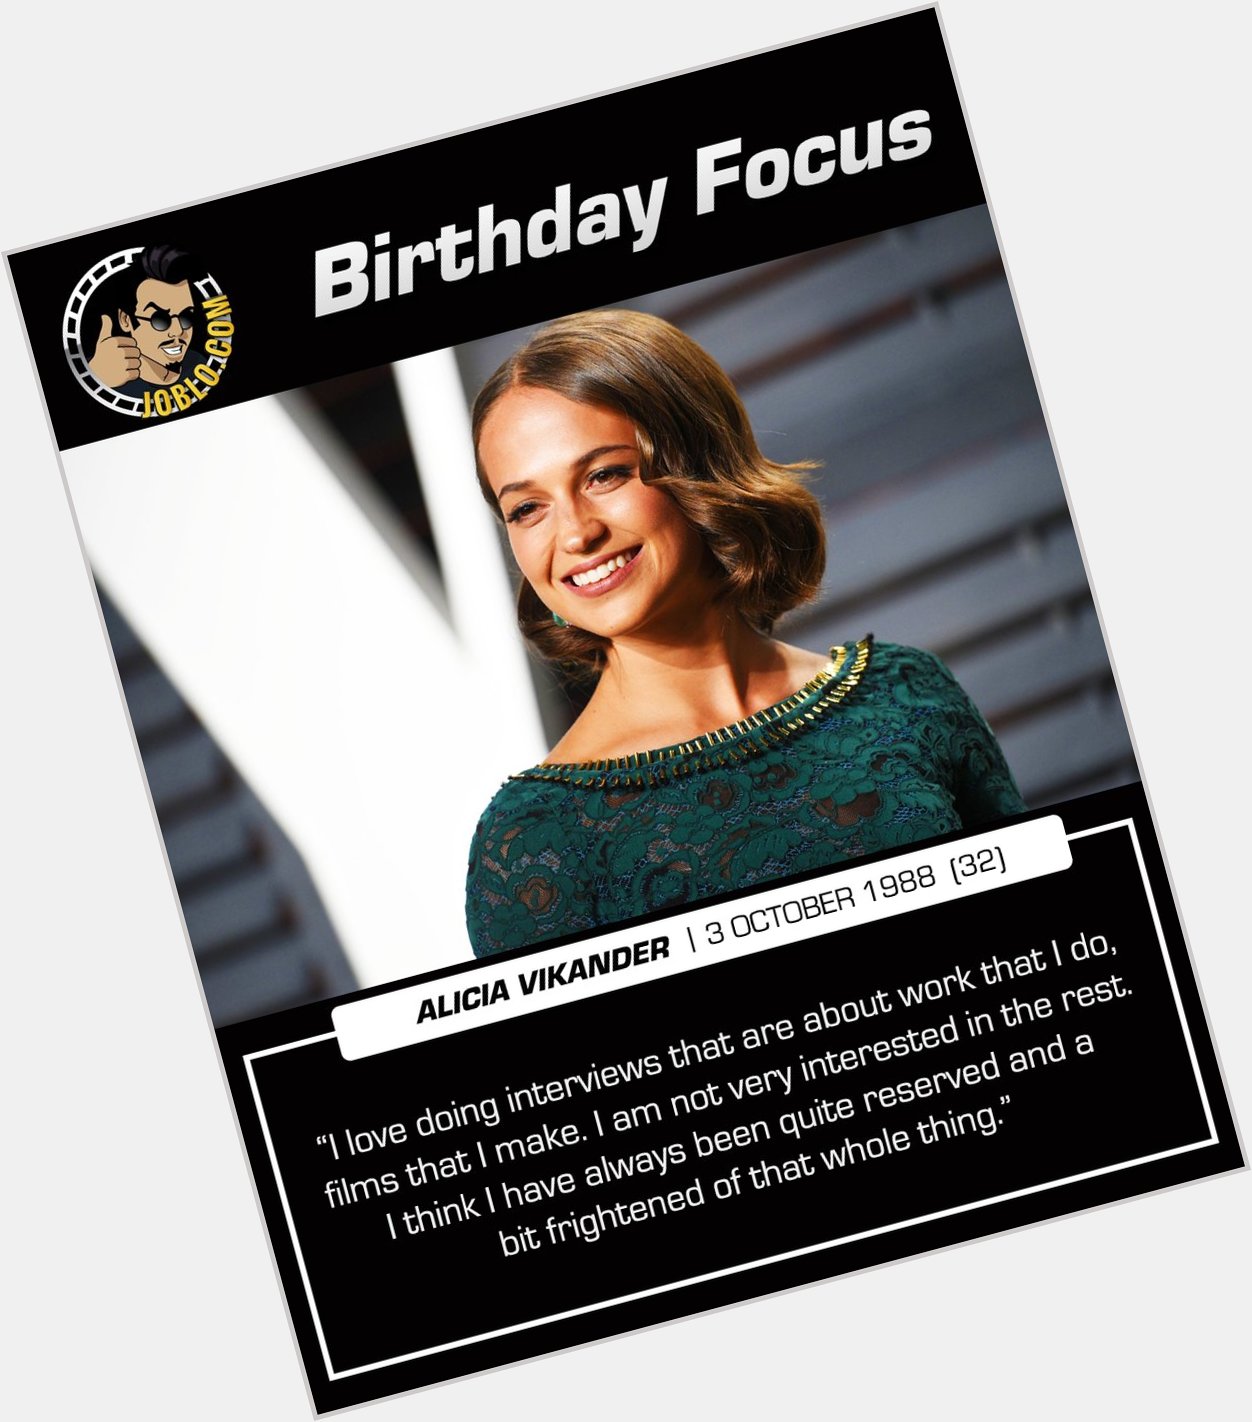 Happy 32nd birthday to Alicia Vikander! 